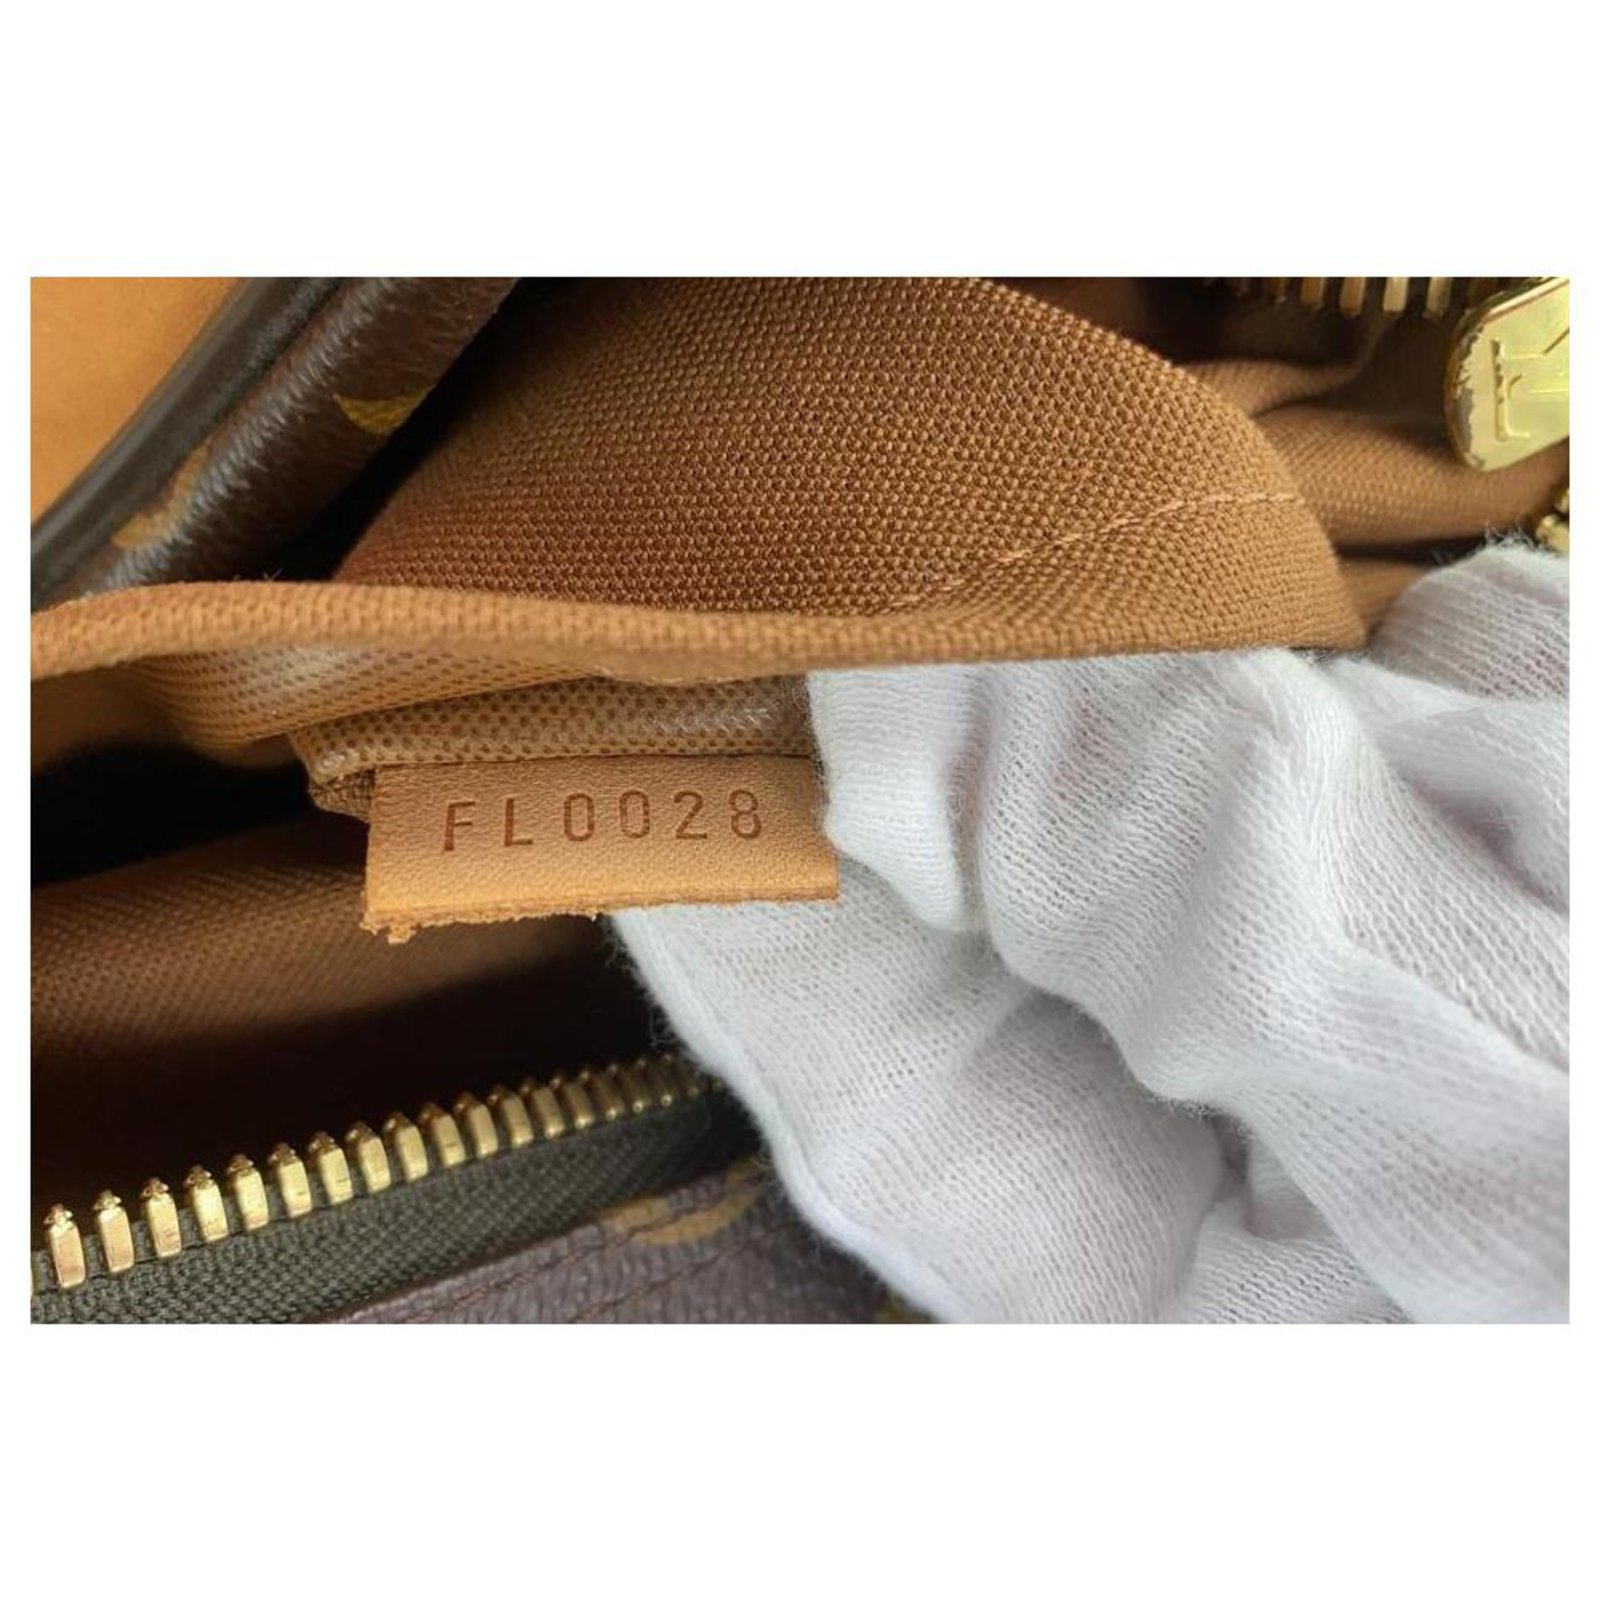 Louis Vuitton Monogram Eole 50 Rolling Luggage Convertible Duffle 857379